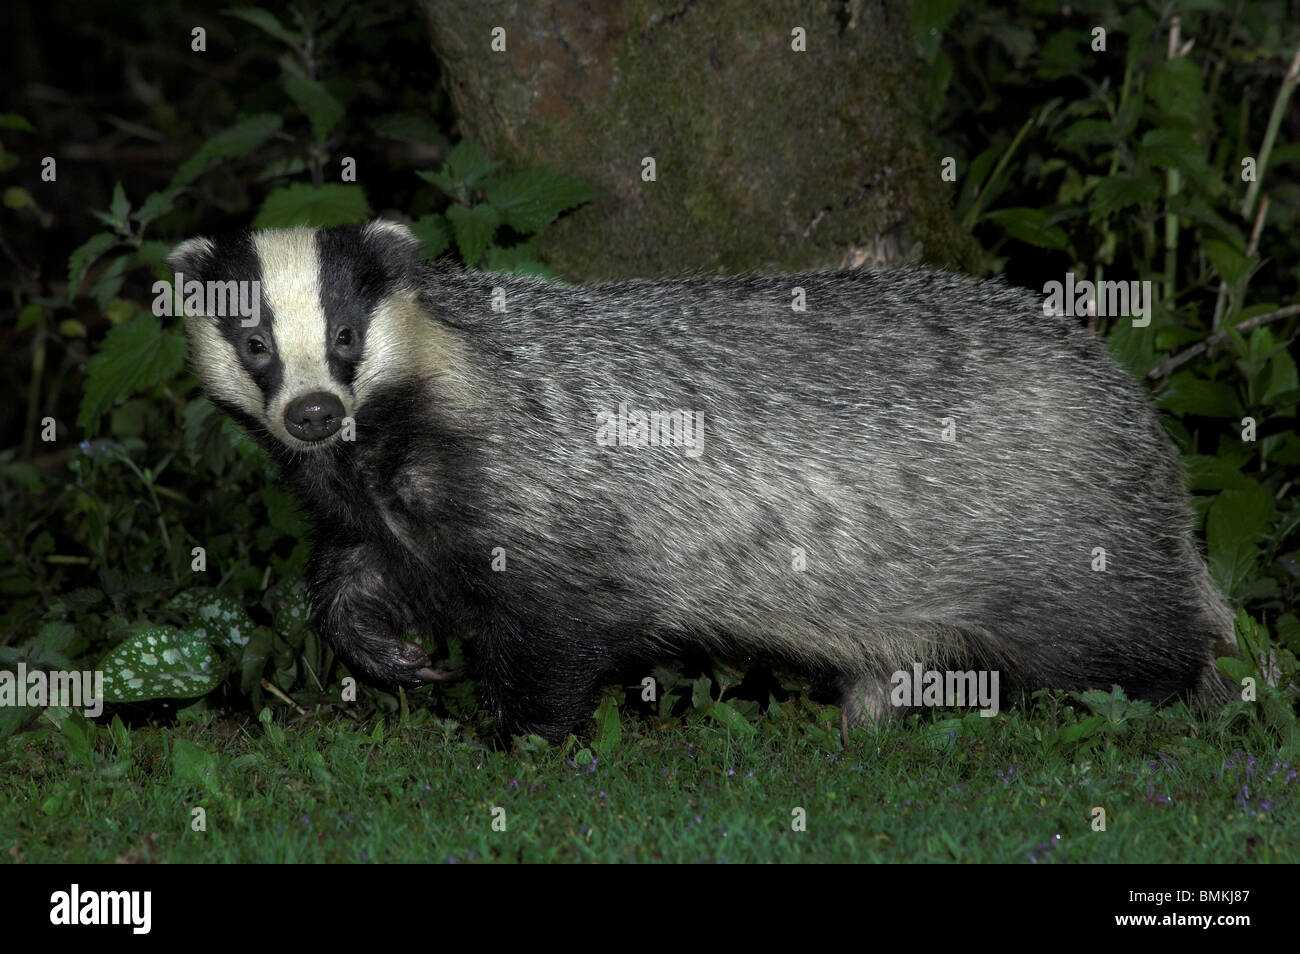 Adult badger, summer Dorset, UK July 2008 Stock Photo